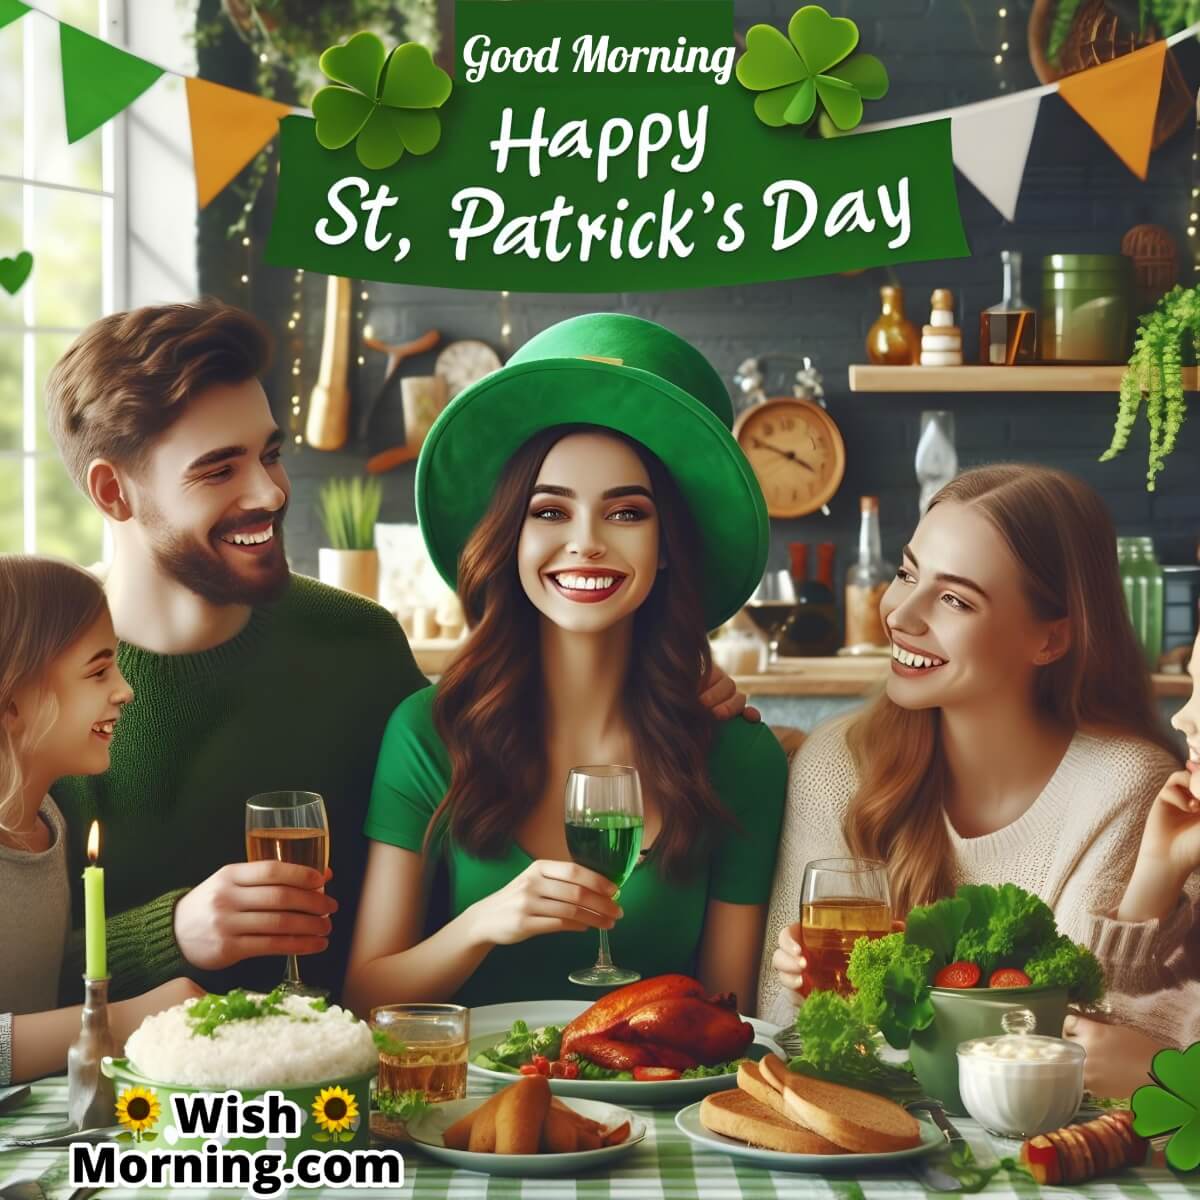 Good Morning St. Patrick's Day Irish Feast